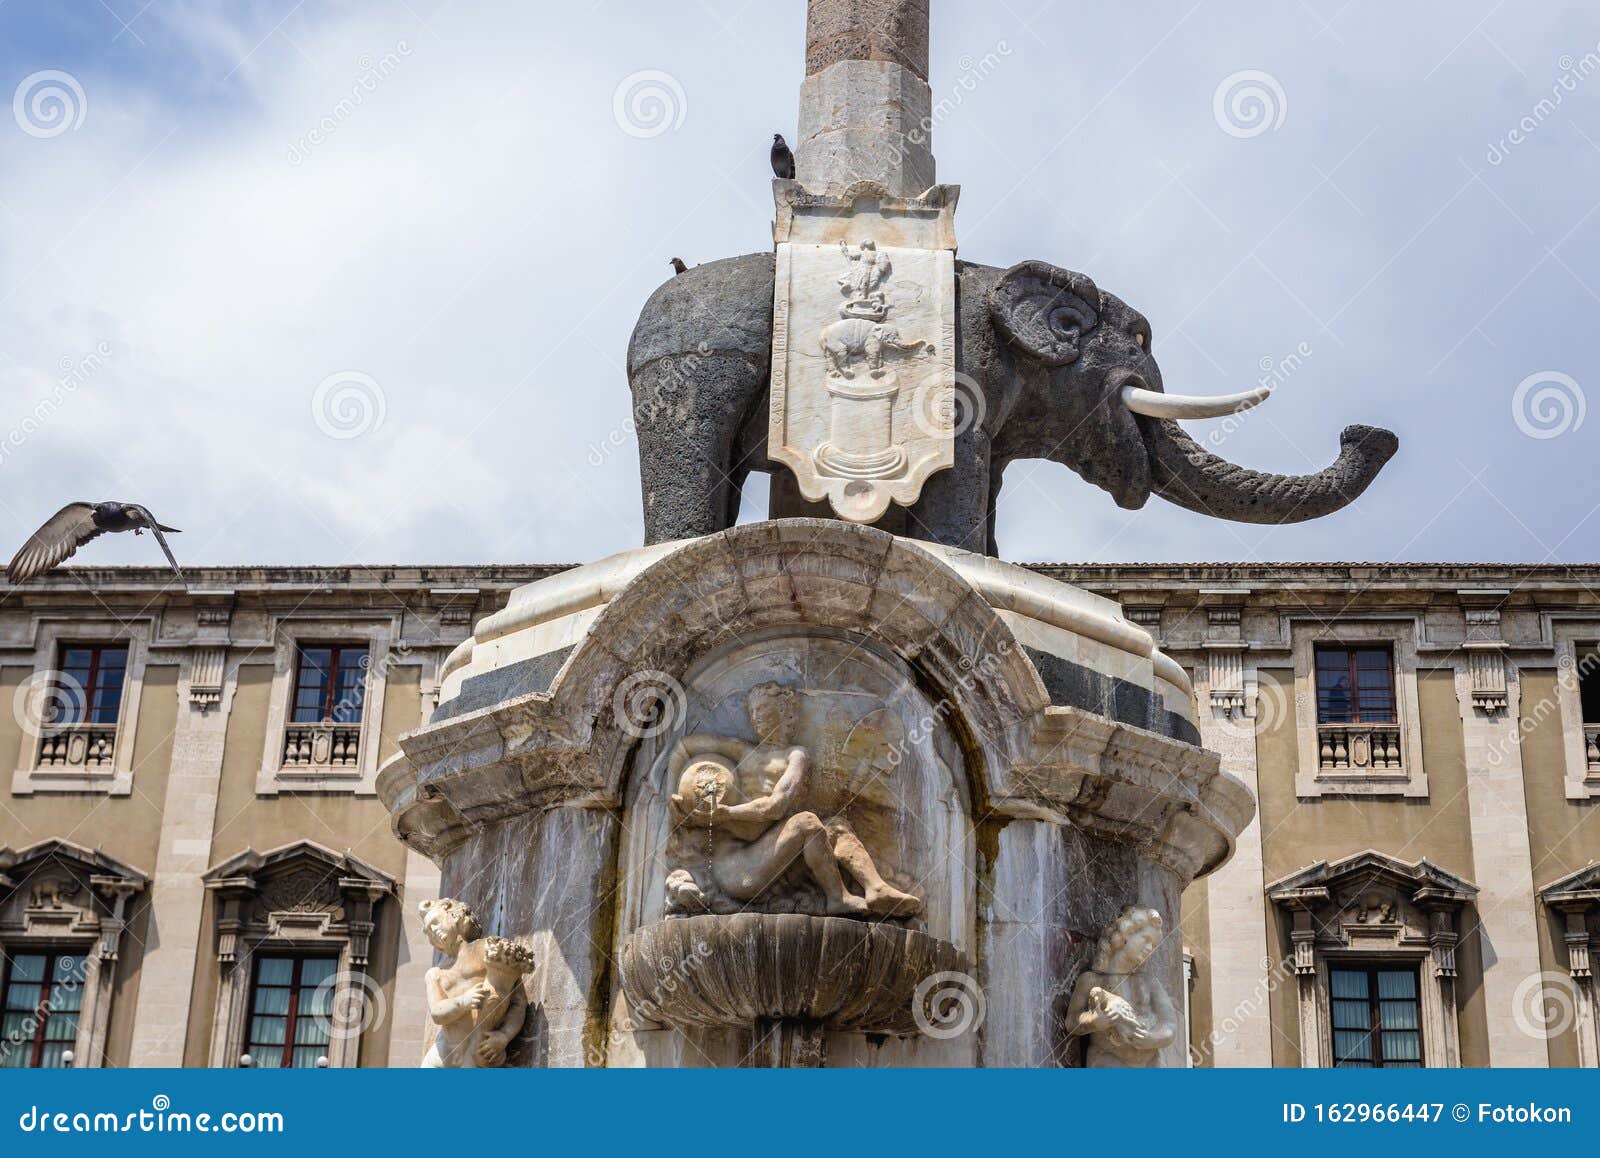 elephant statue in catania